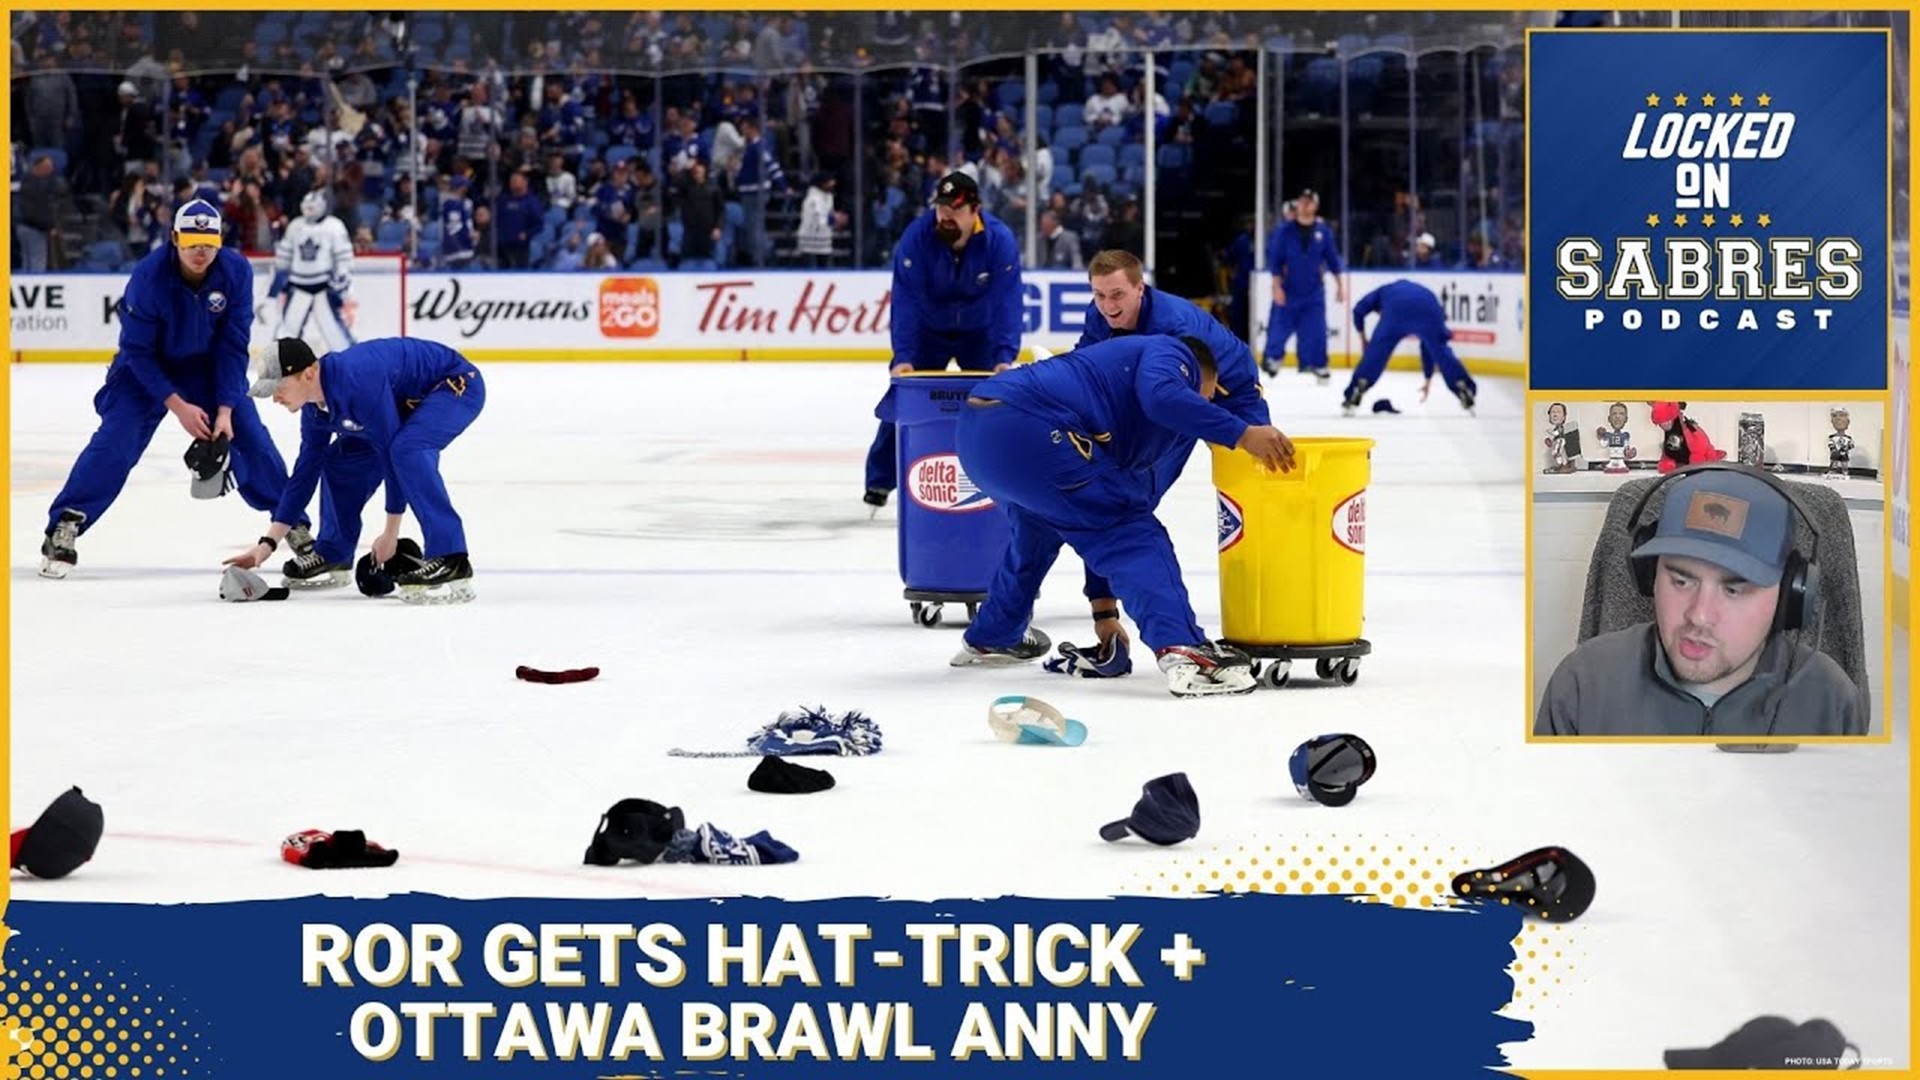 Ryan O'Reilly gets hat-trick + Ottawa Brawl Anny